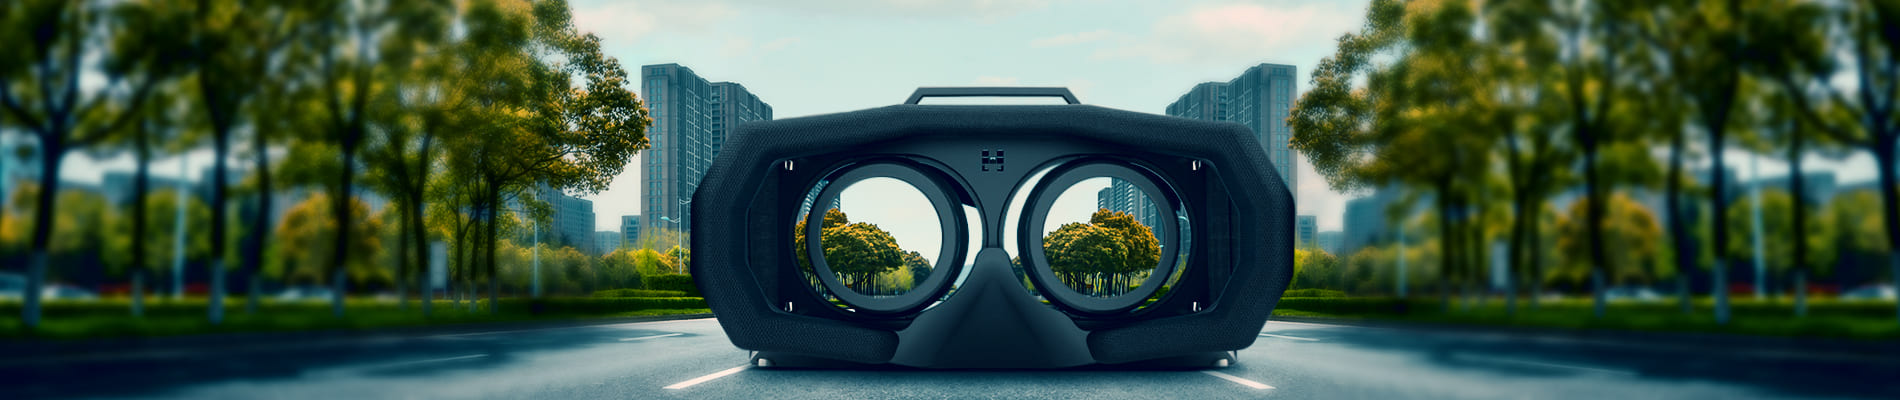 Virtual Reality Walkthrough